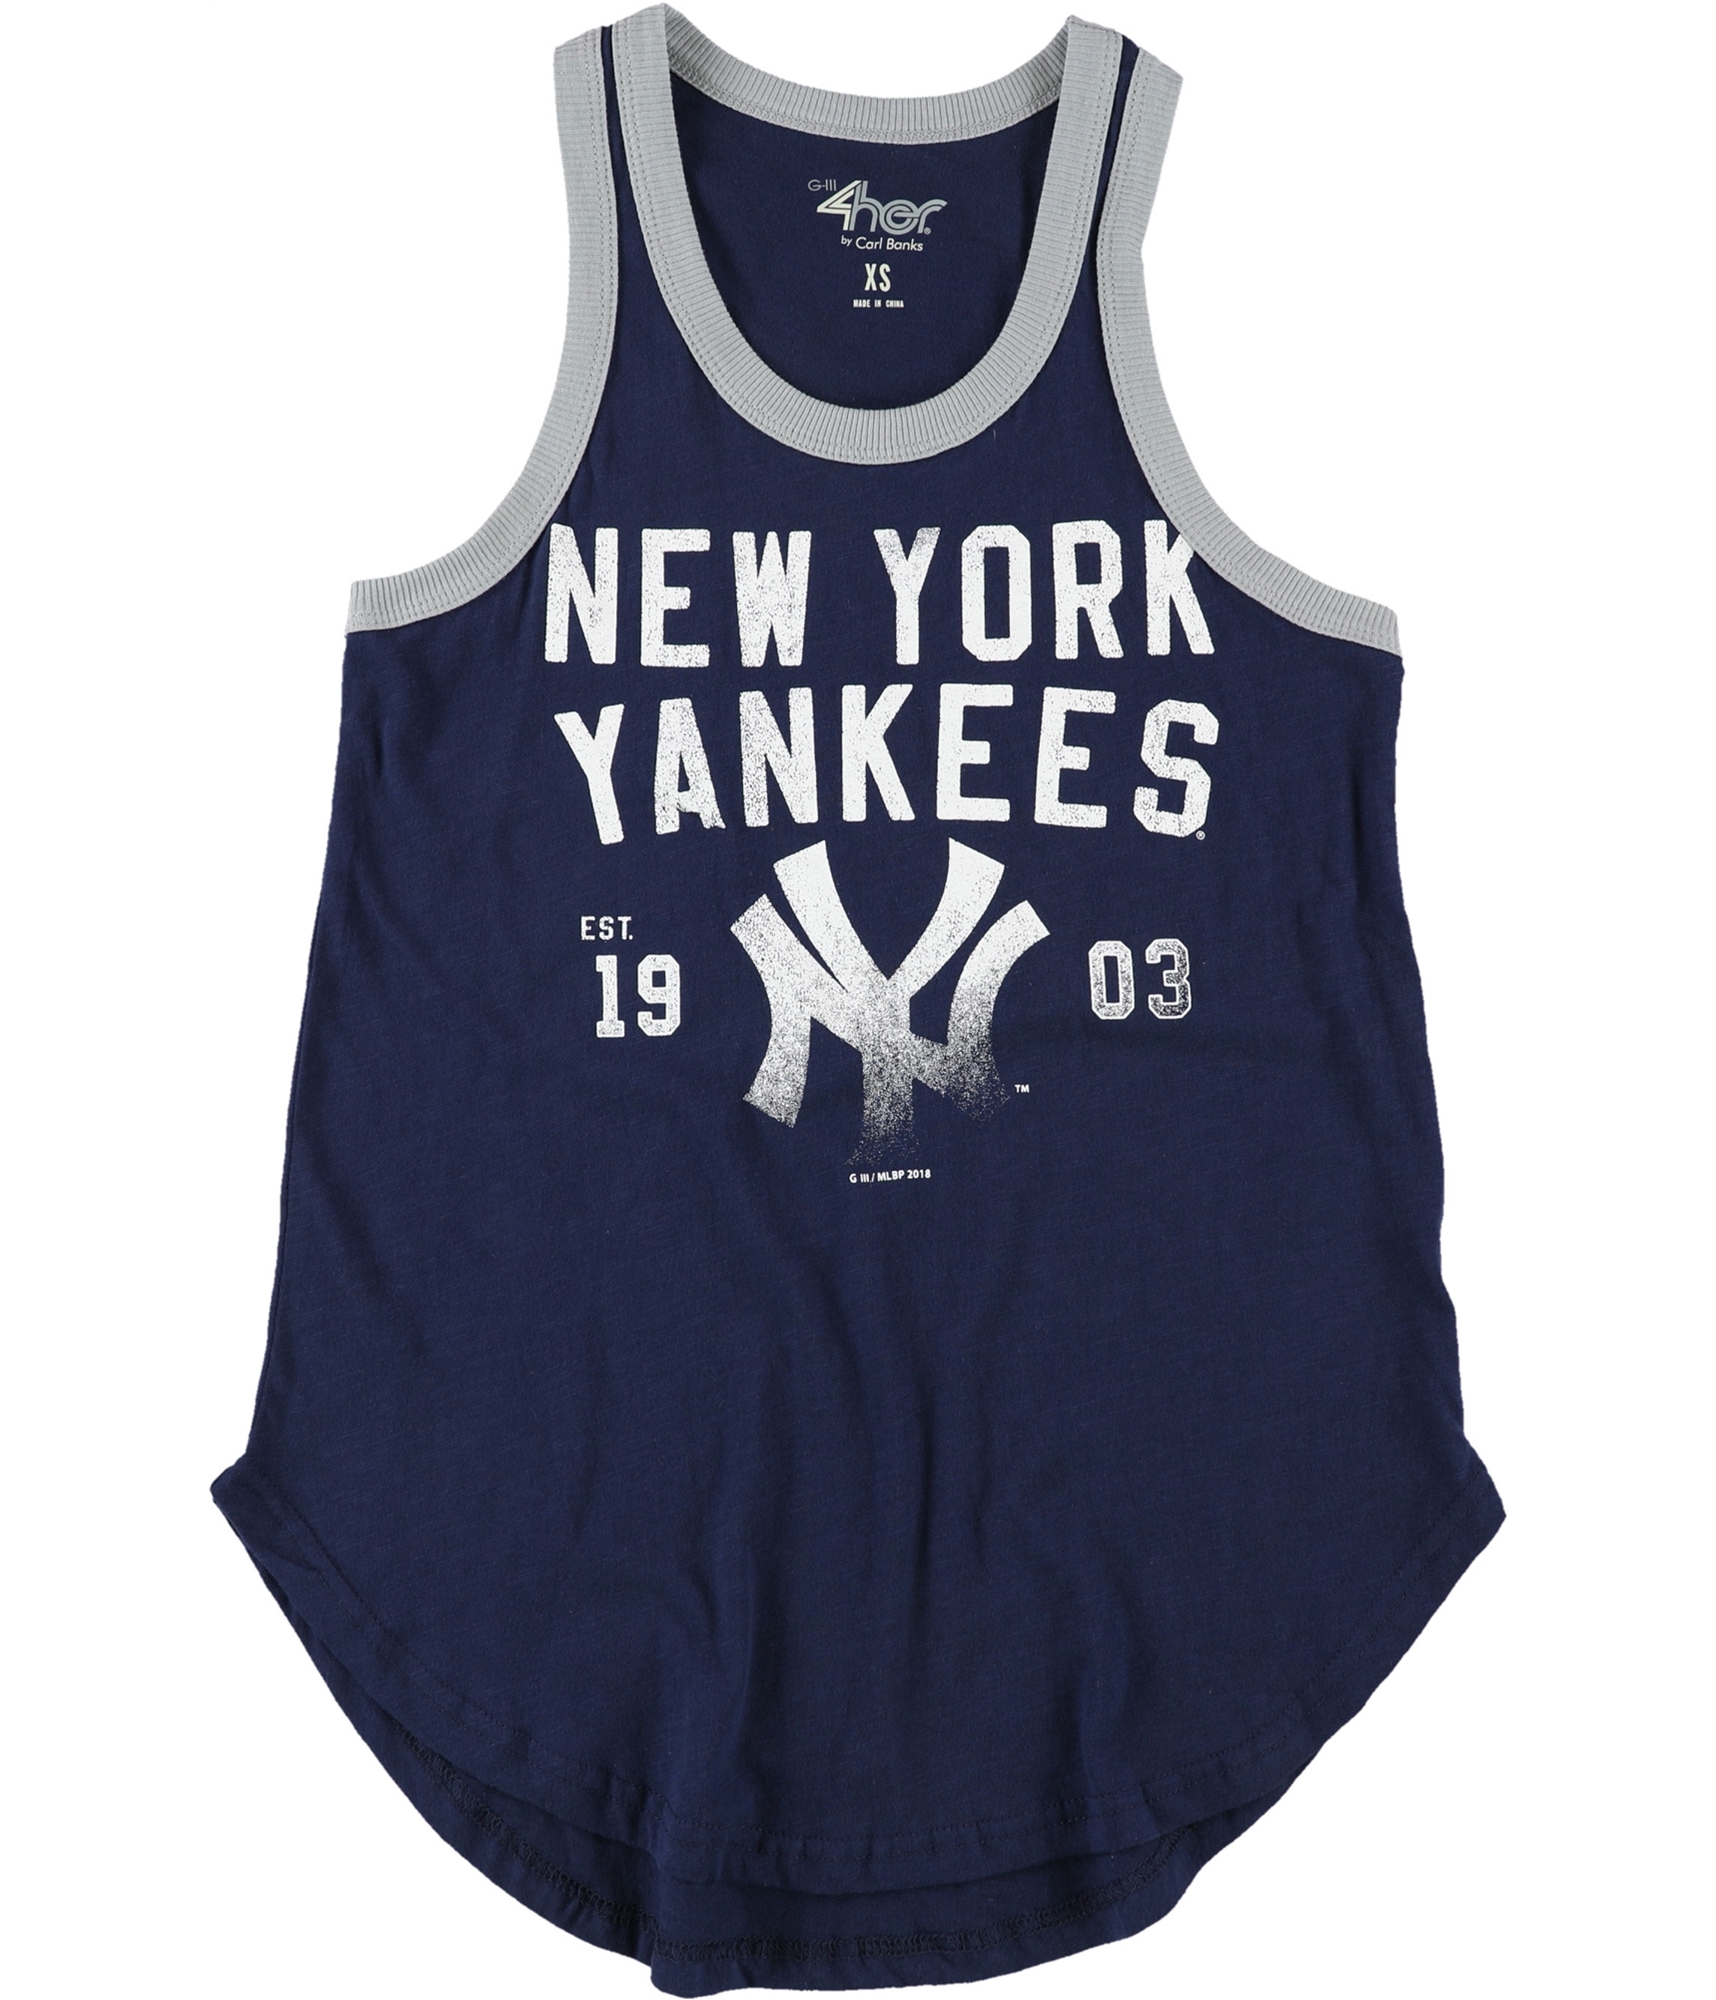 Buy a Womens G-III Sports New York Yankees Racerback Tank Top Online